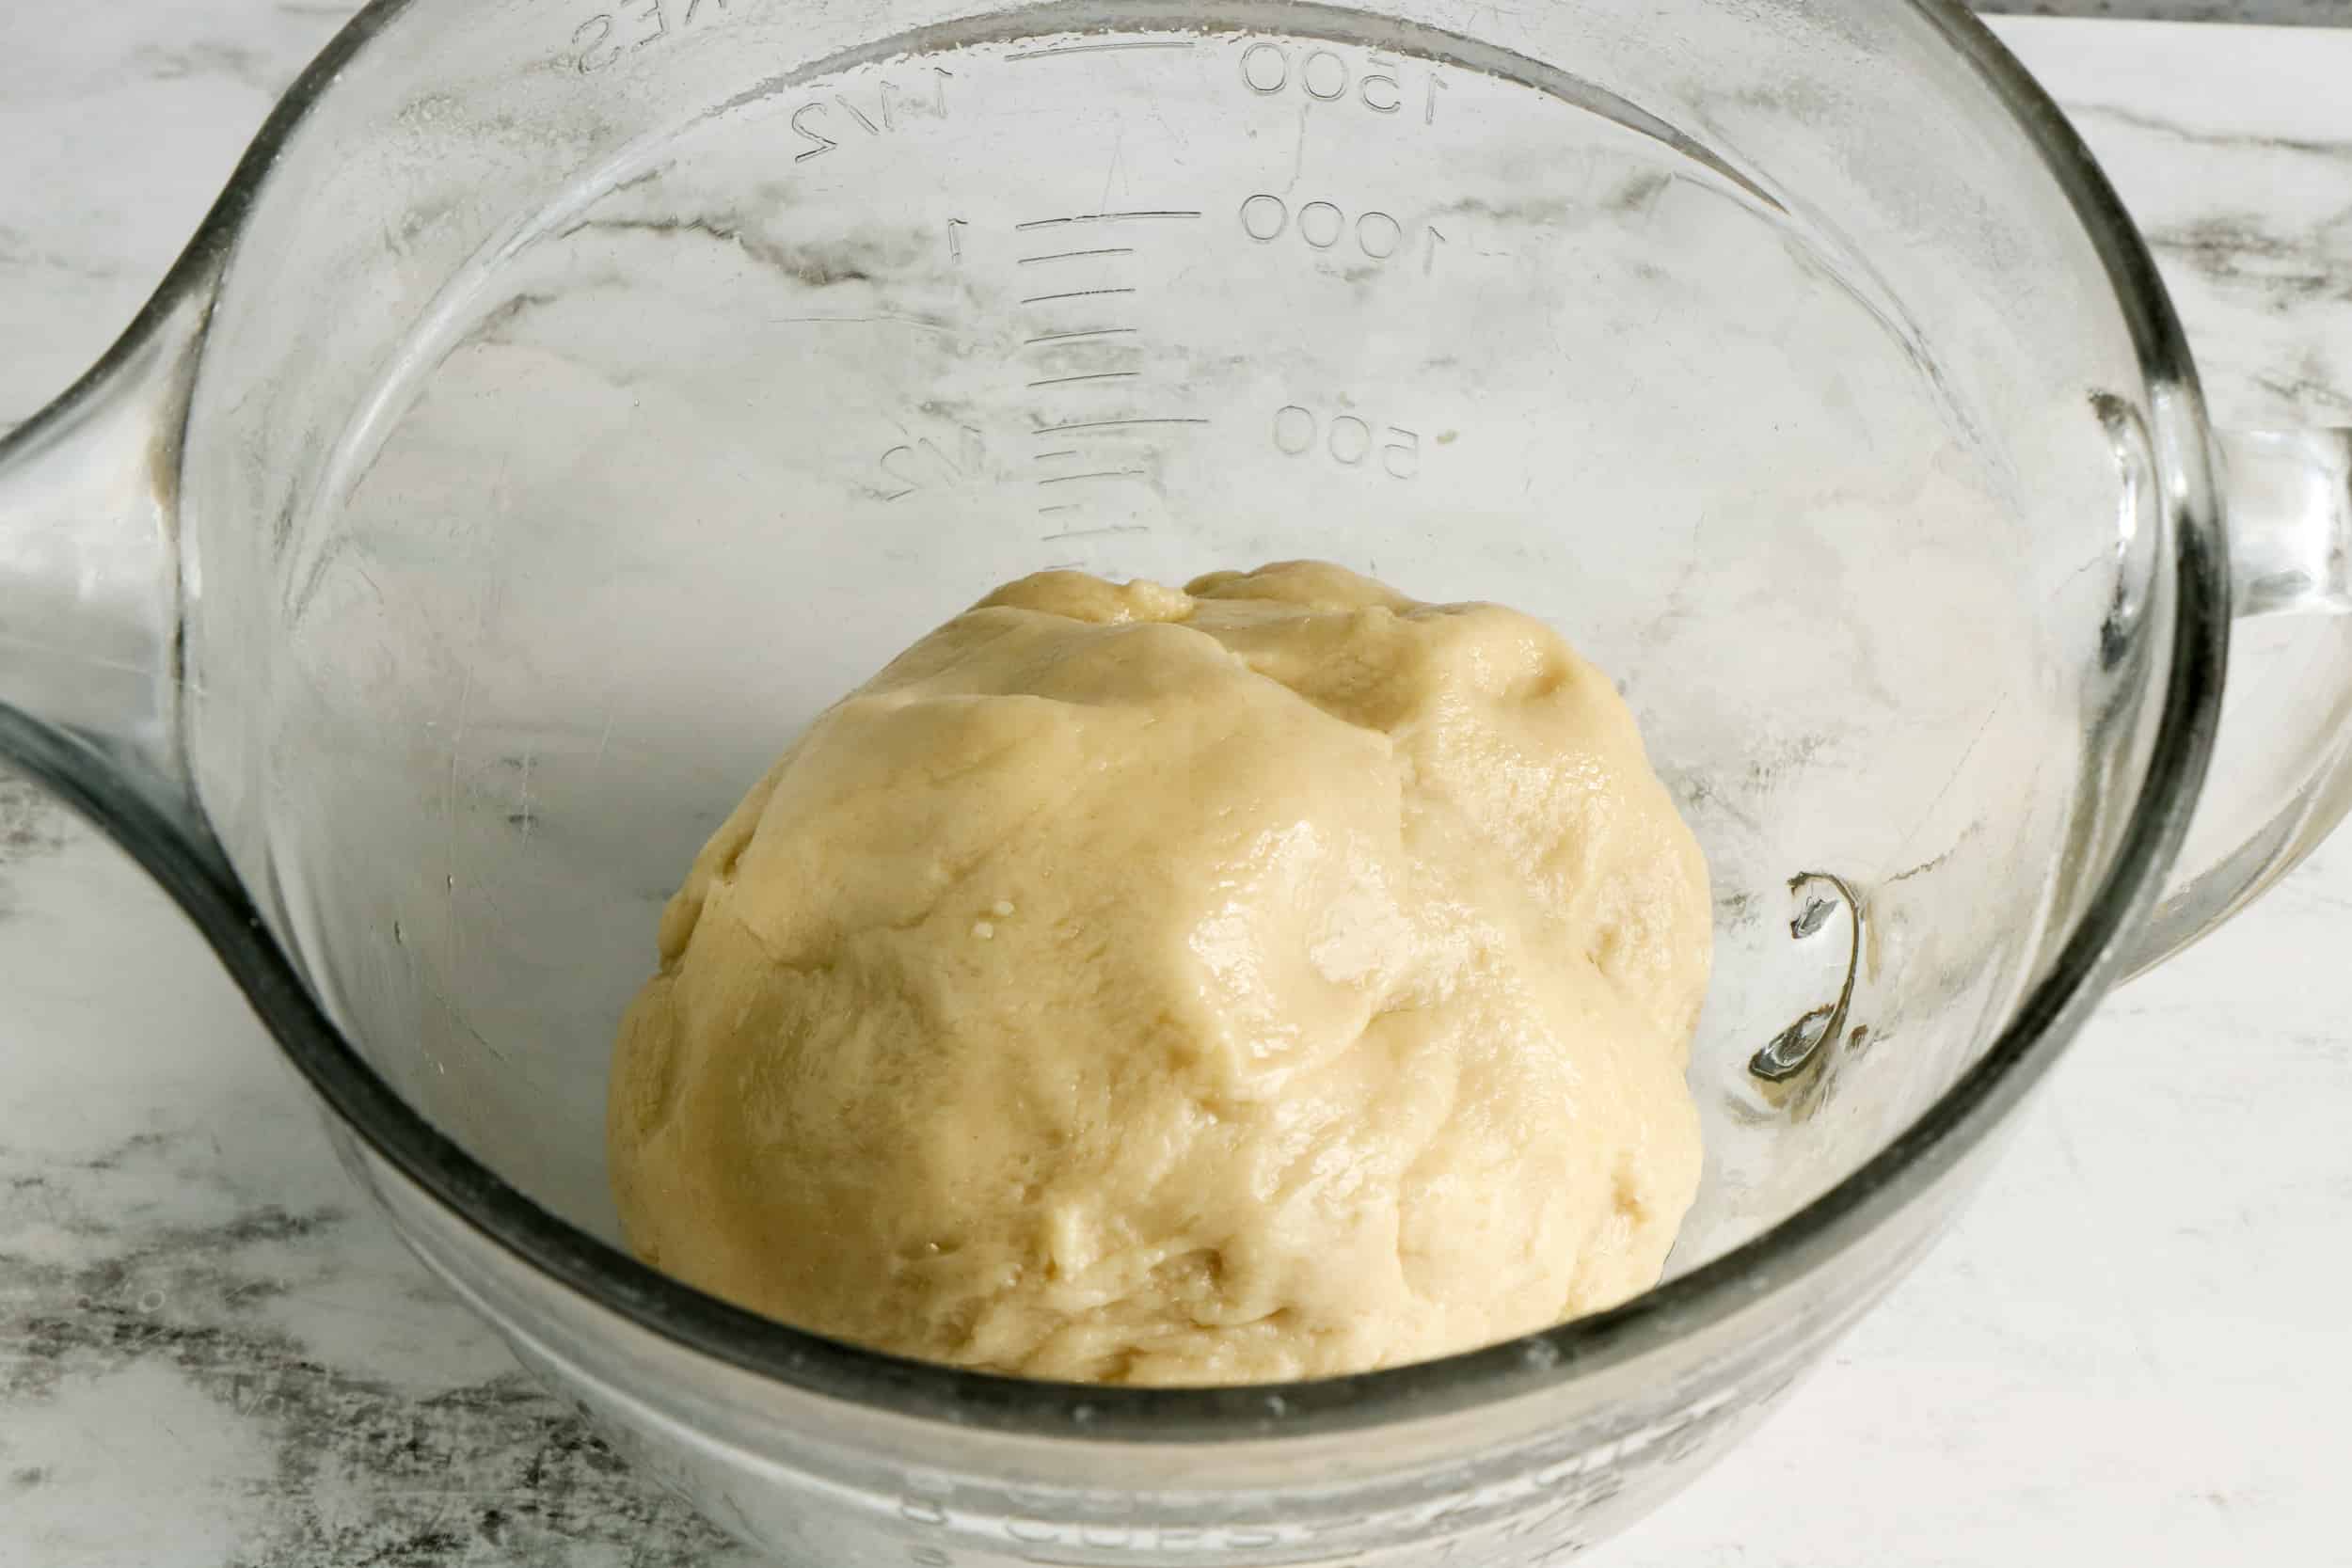 dough rising in glass bowl